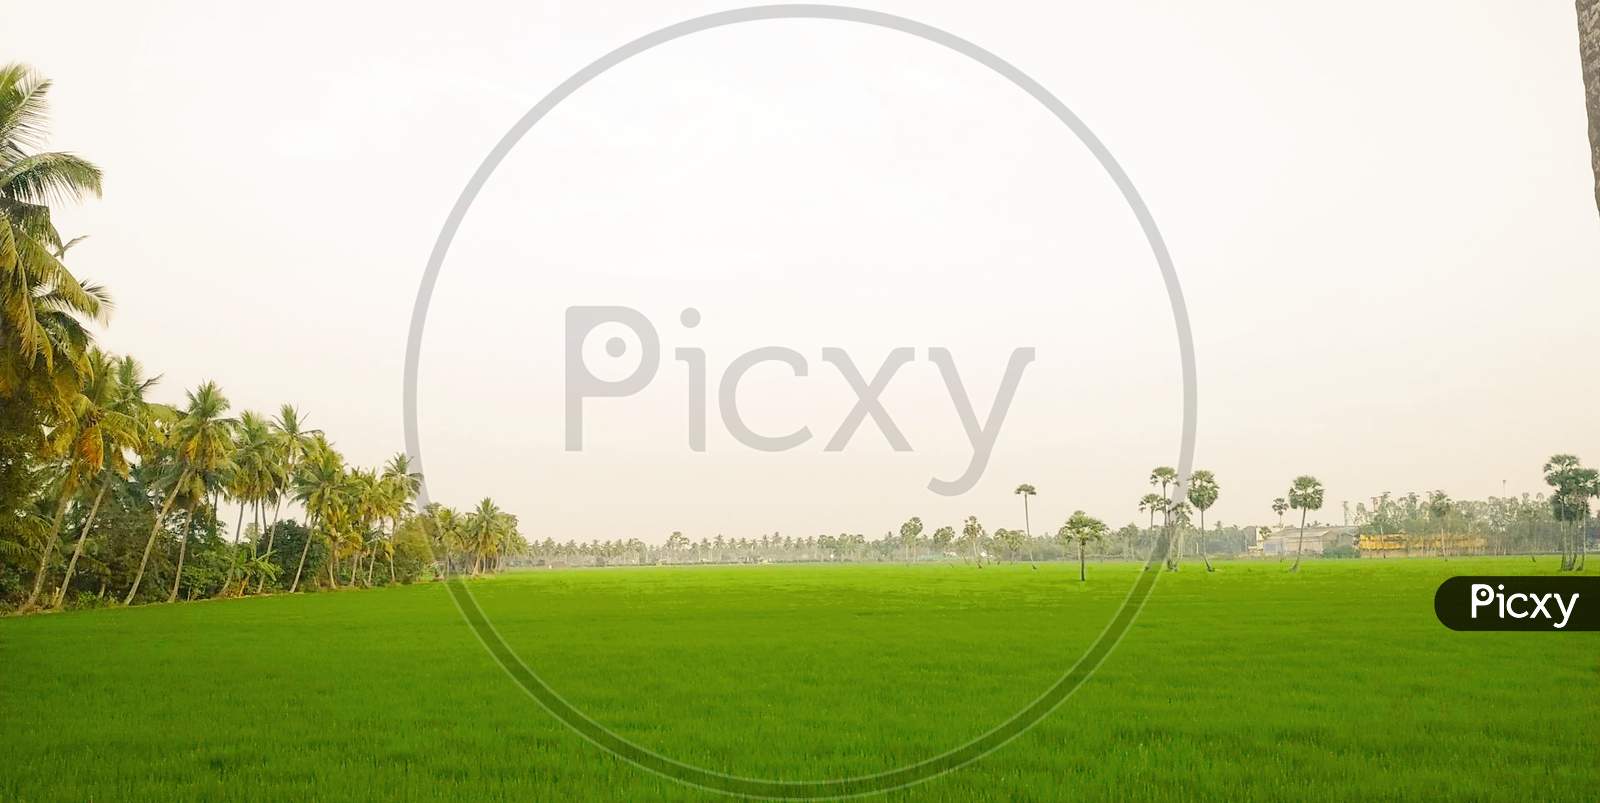 Paddy fields